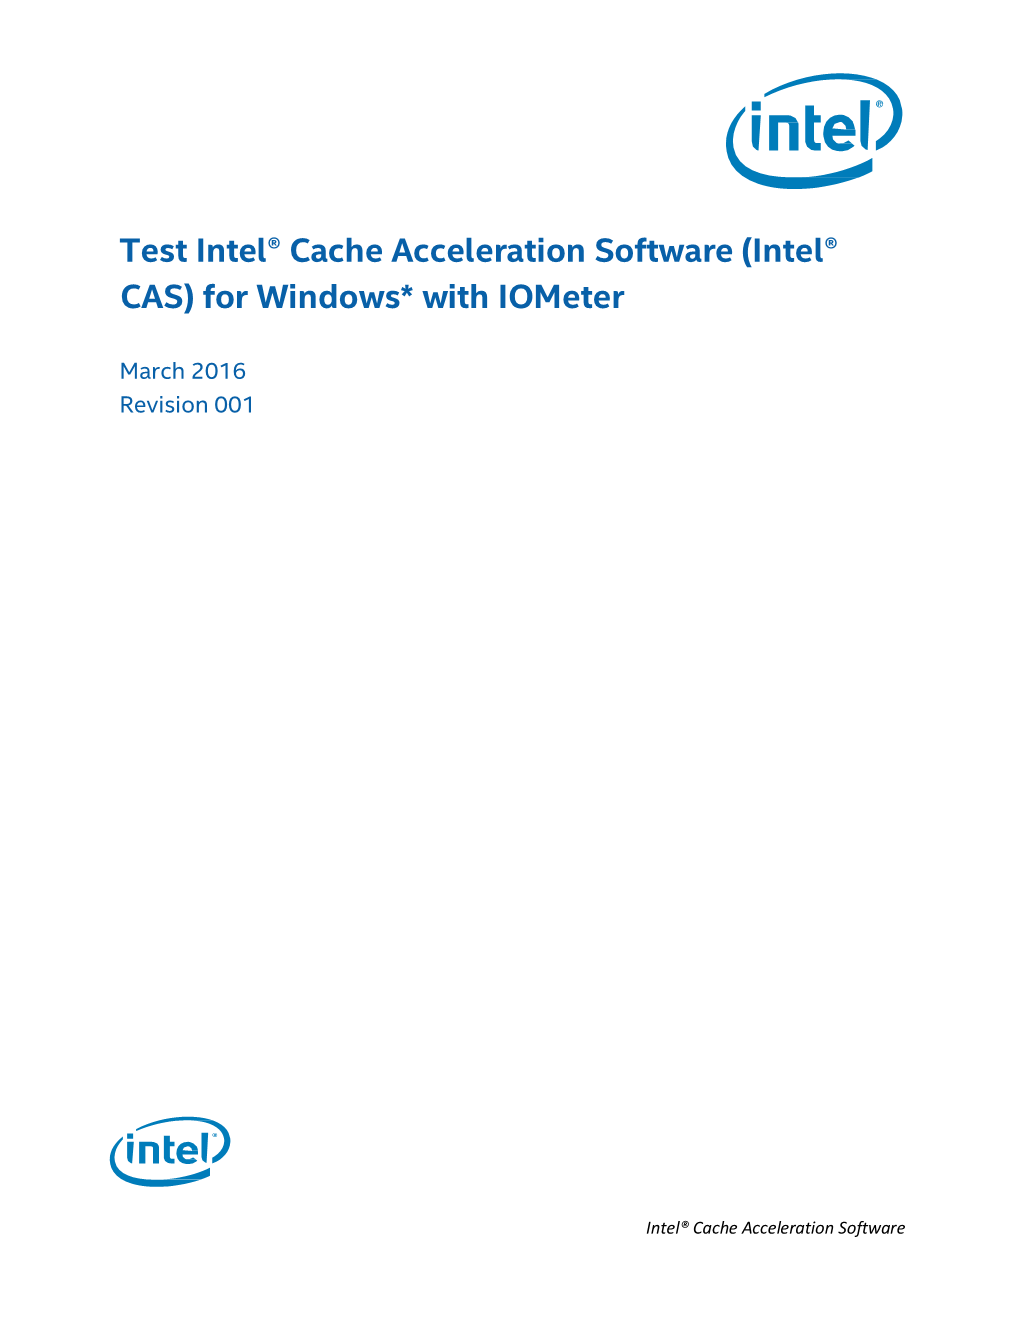 Intel Cache Acceleration Software (Intel CAS) for Windows* Quick